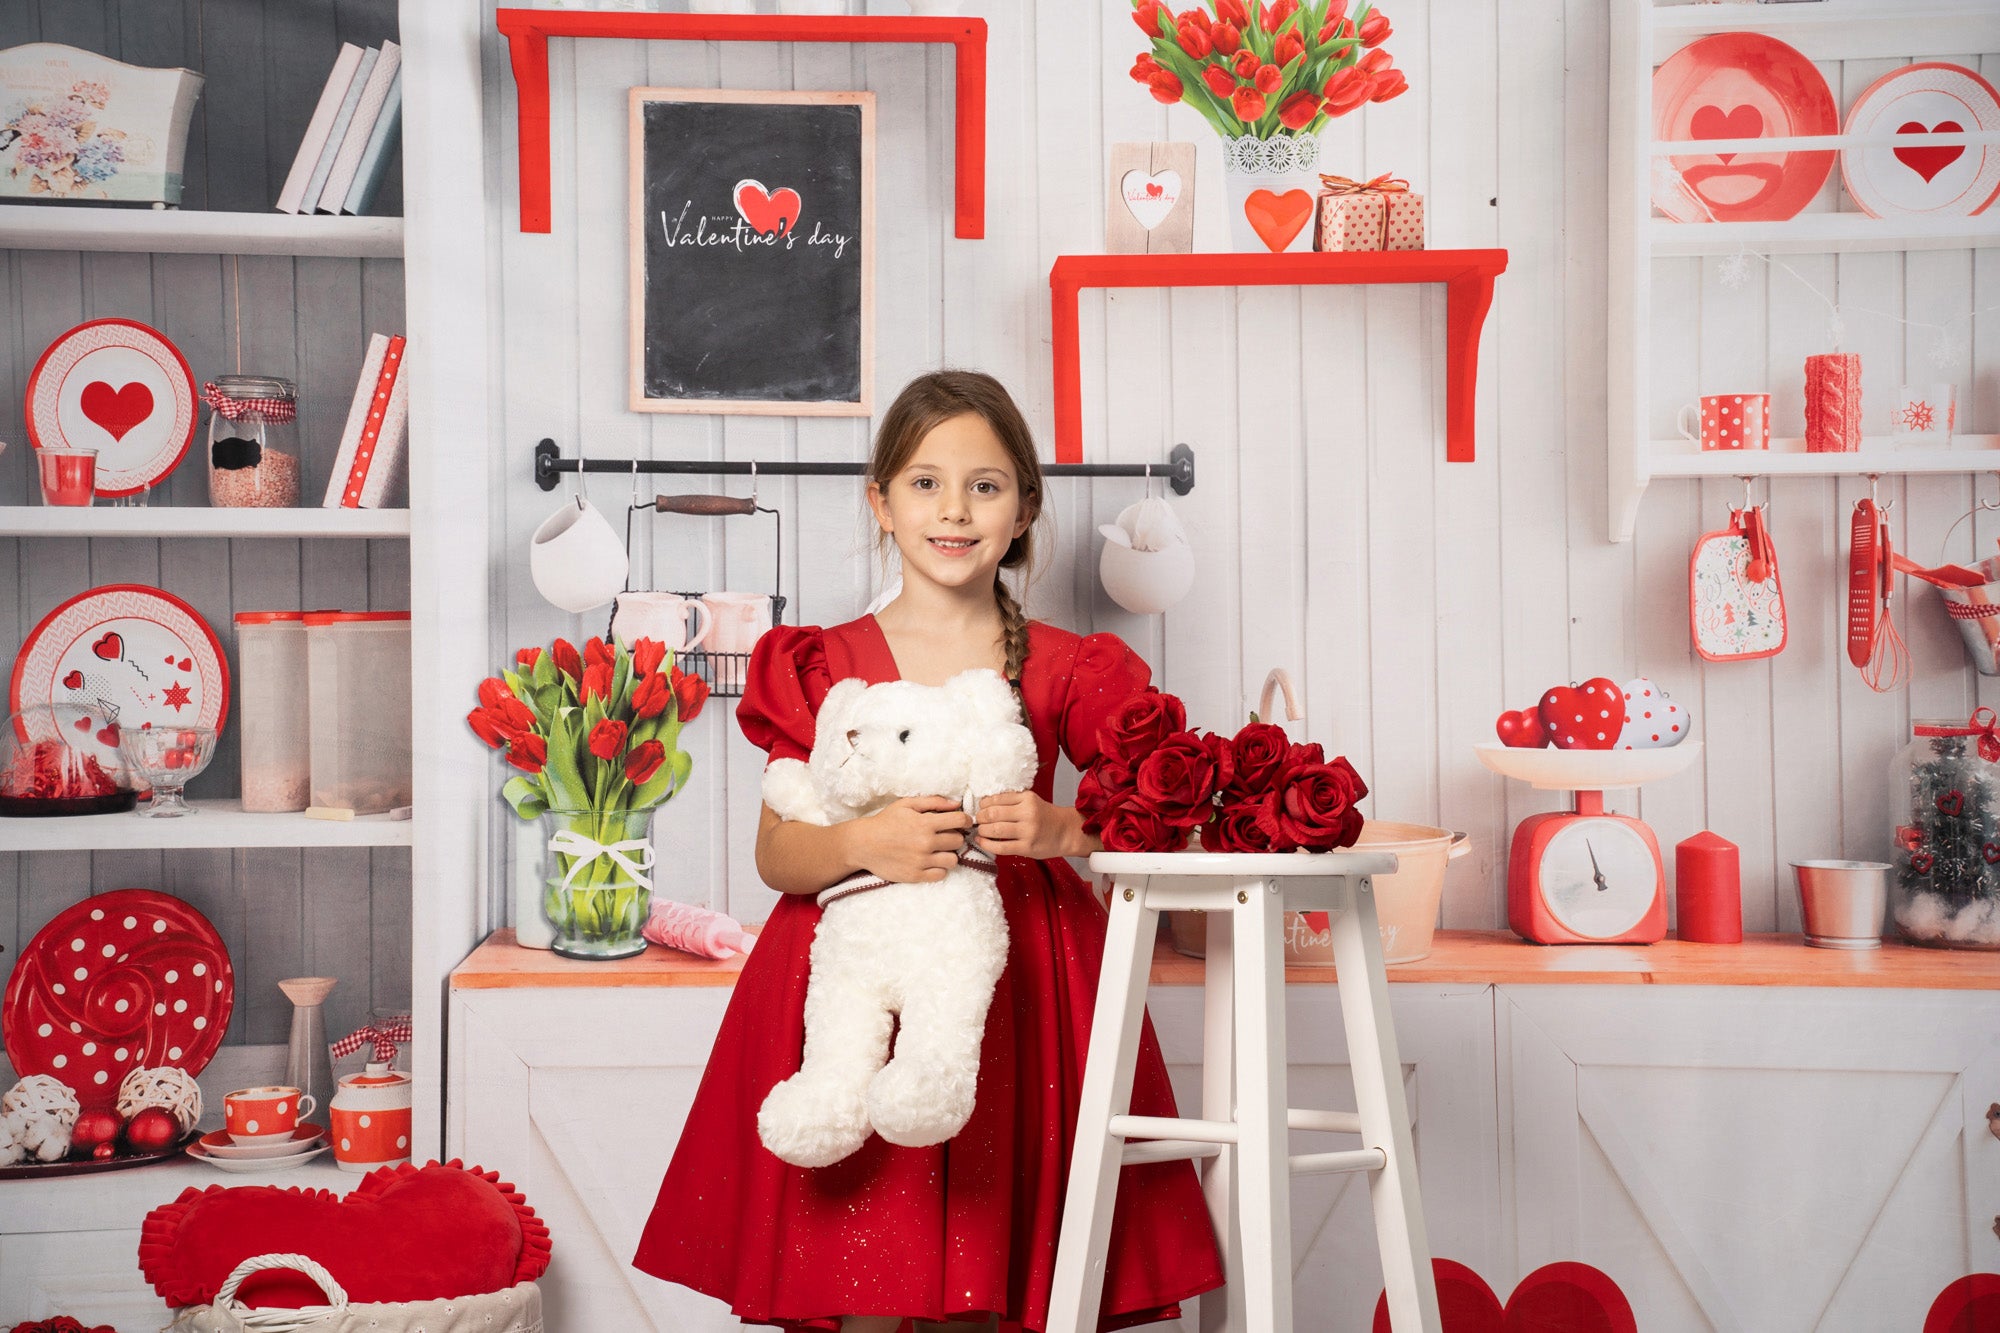 Kate Valentine's Day Love Decorations Backdrop Designed by Angela Mari